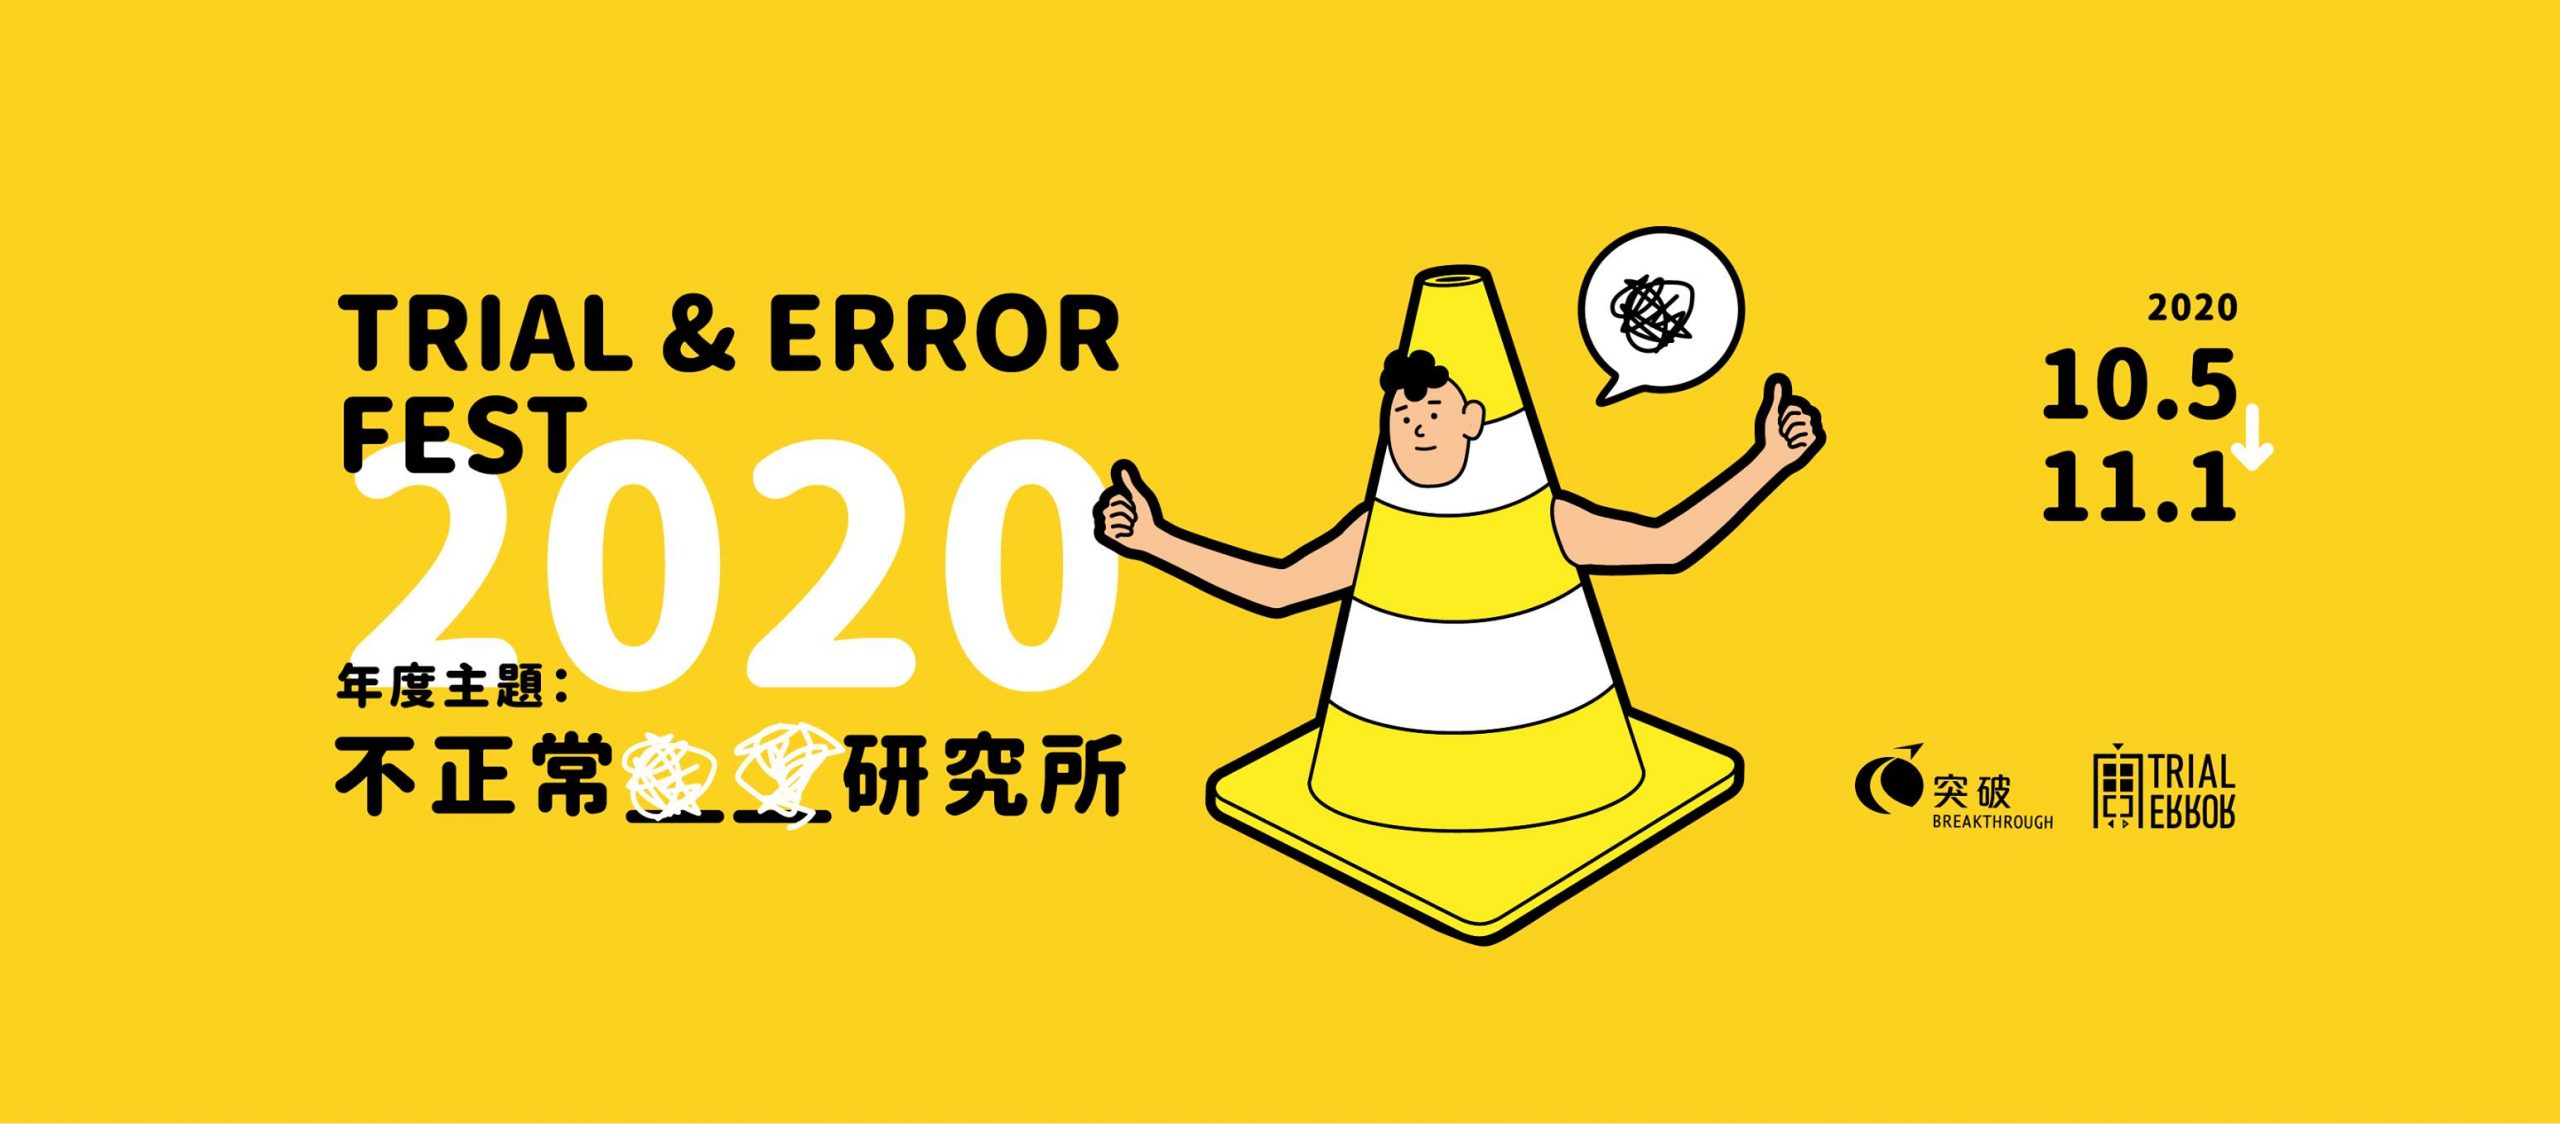 Trial and Error Lab 實驗故事：小誌創成展 @ Trial and Error Fest 2020